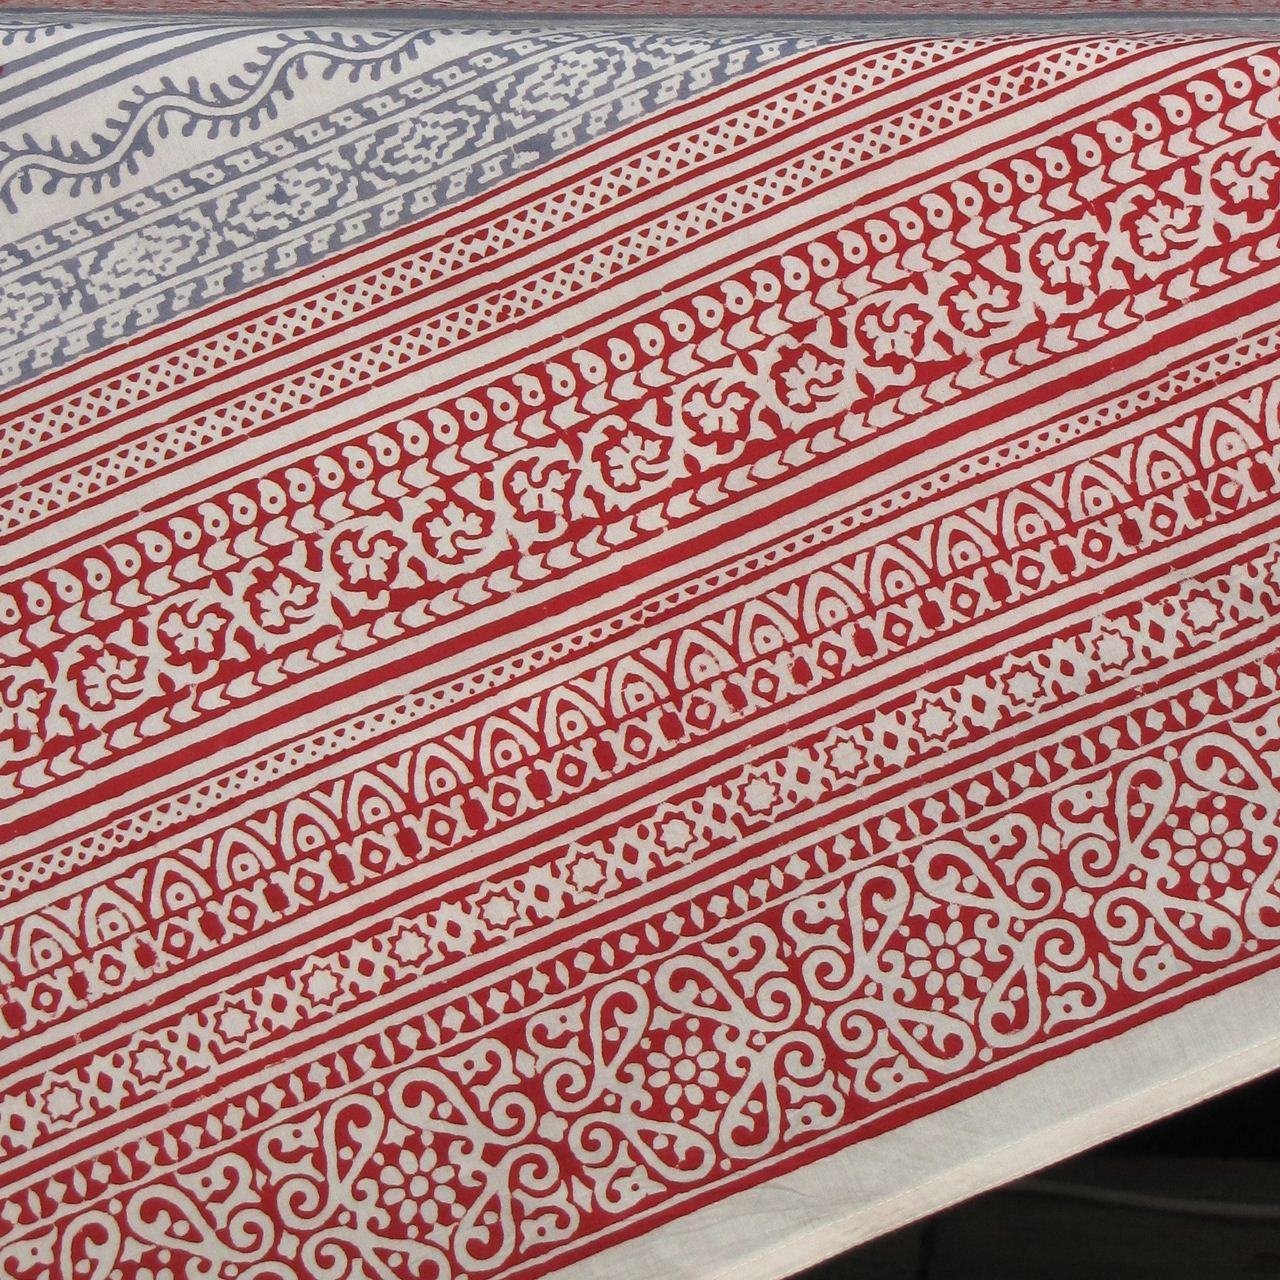 Tischdecke Blockprint Red/Tealblue Ornamental ca. 140x220 cm